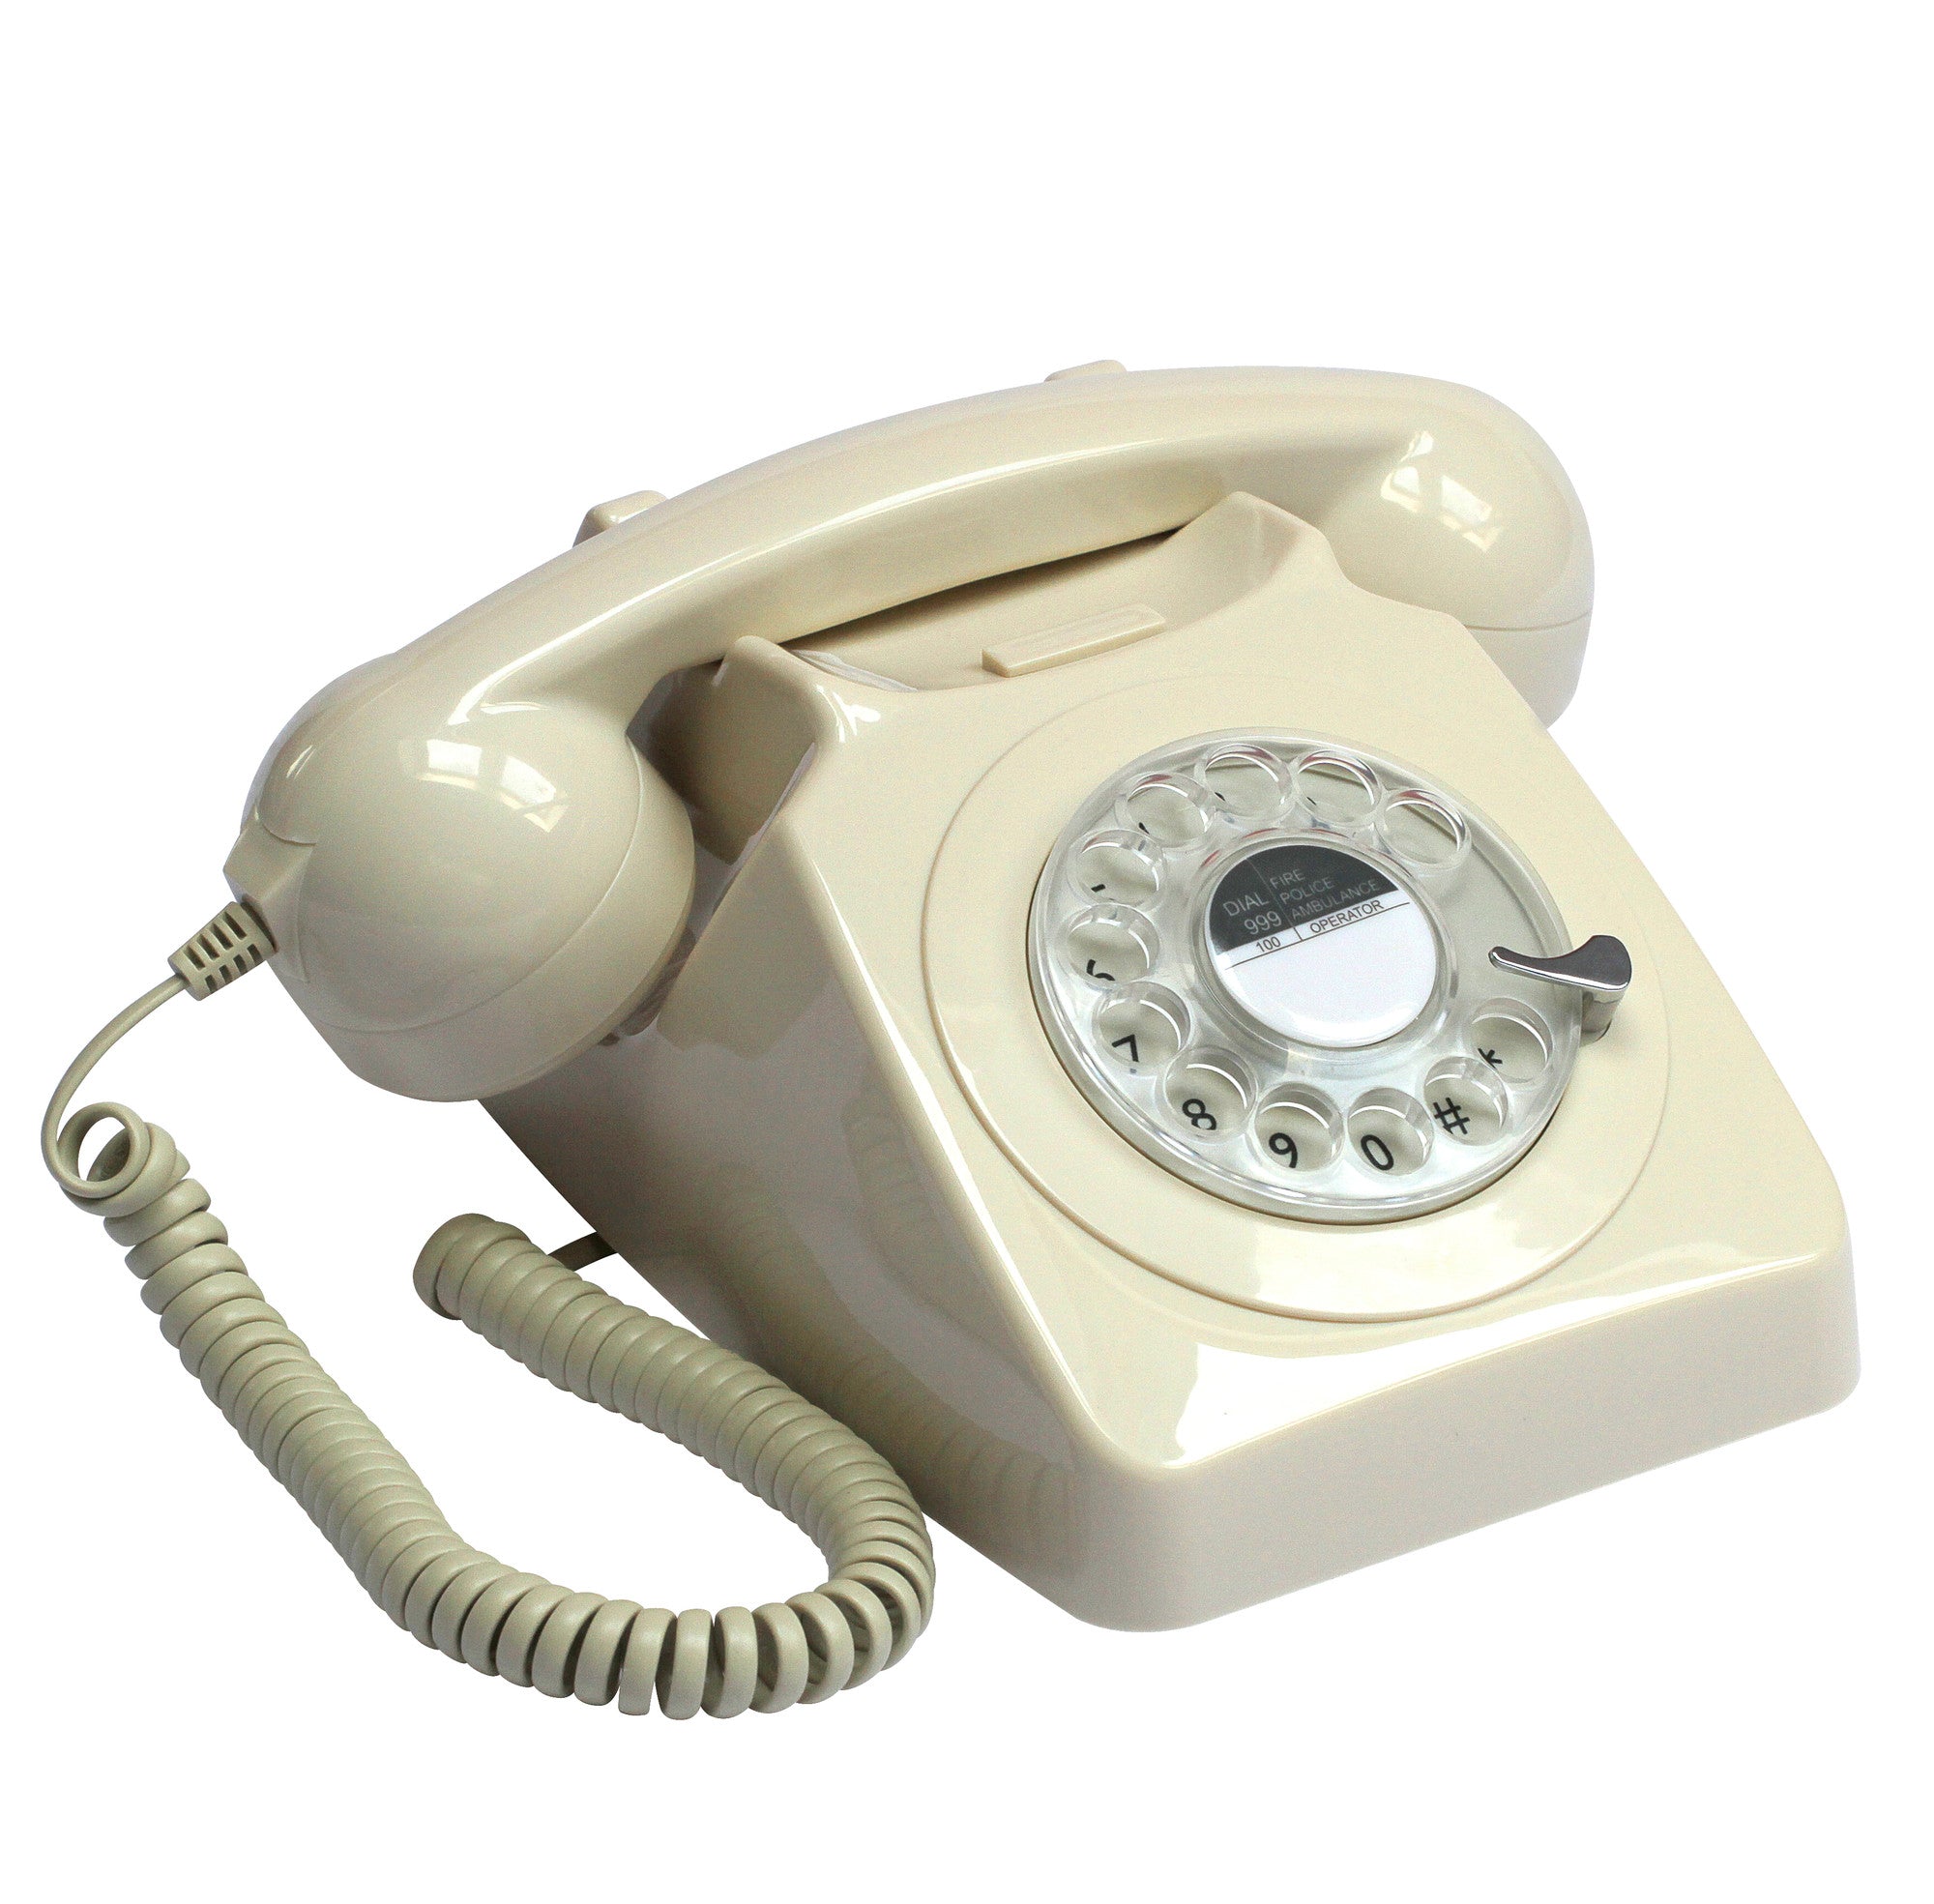 GPO 746 ROTARY TELEPHONE - IVORY 1